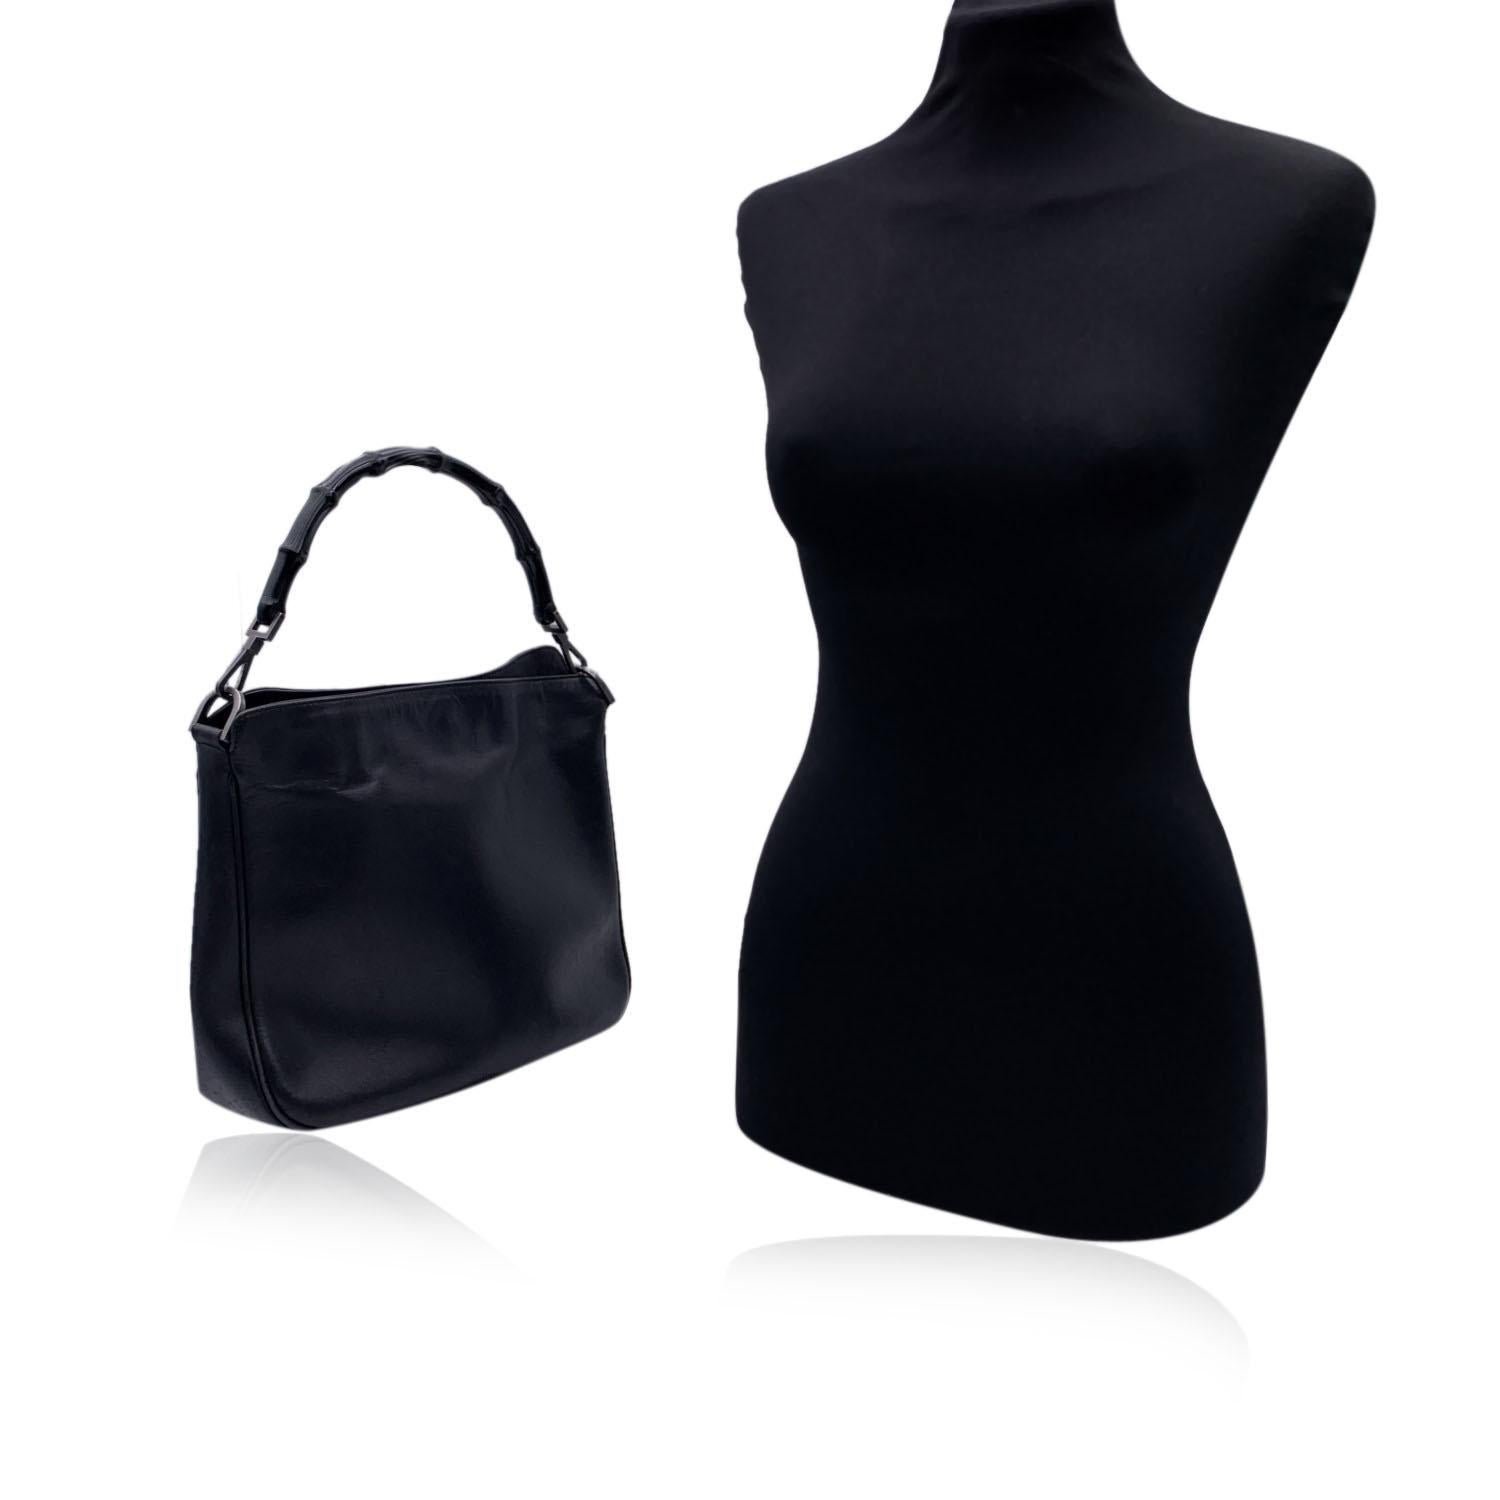 Women's Gucci Black Leather Bamboo Handle Tote Handbag